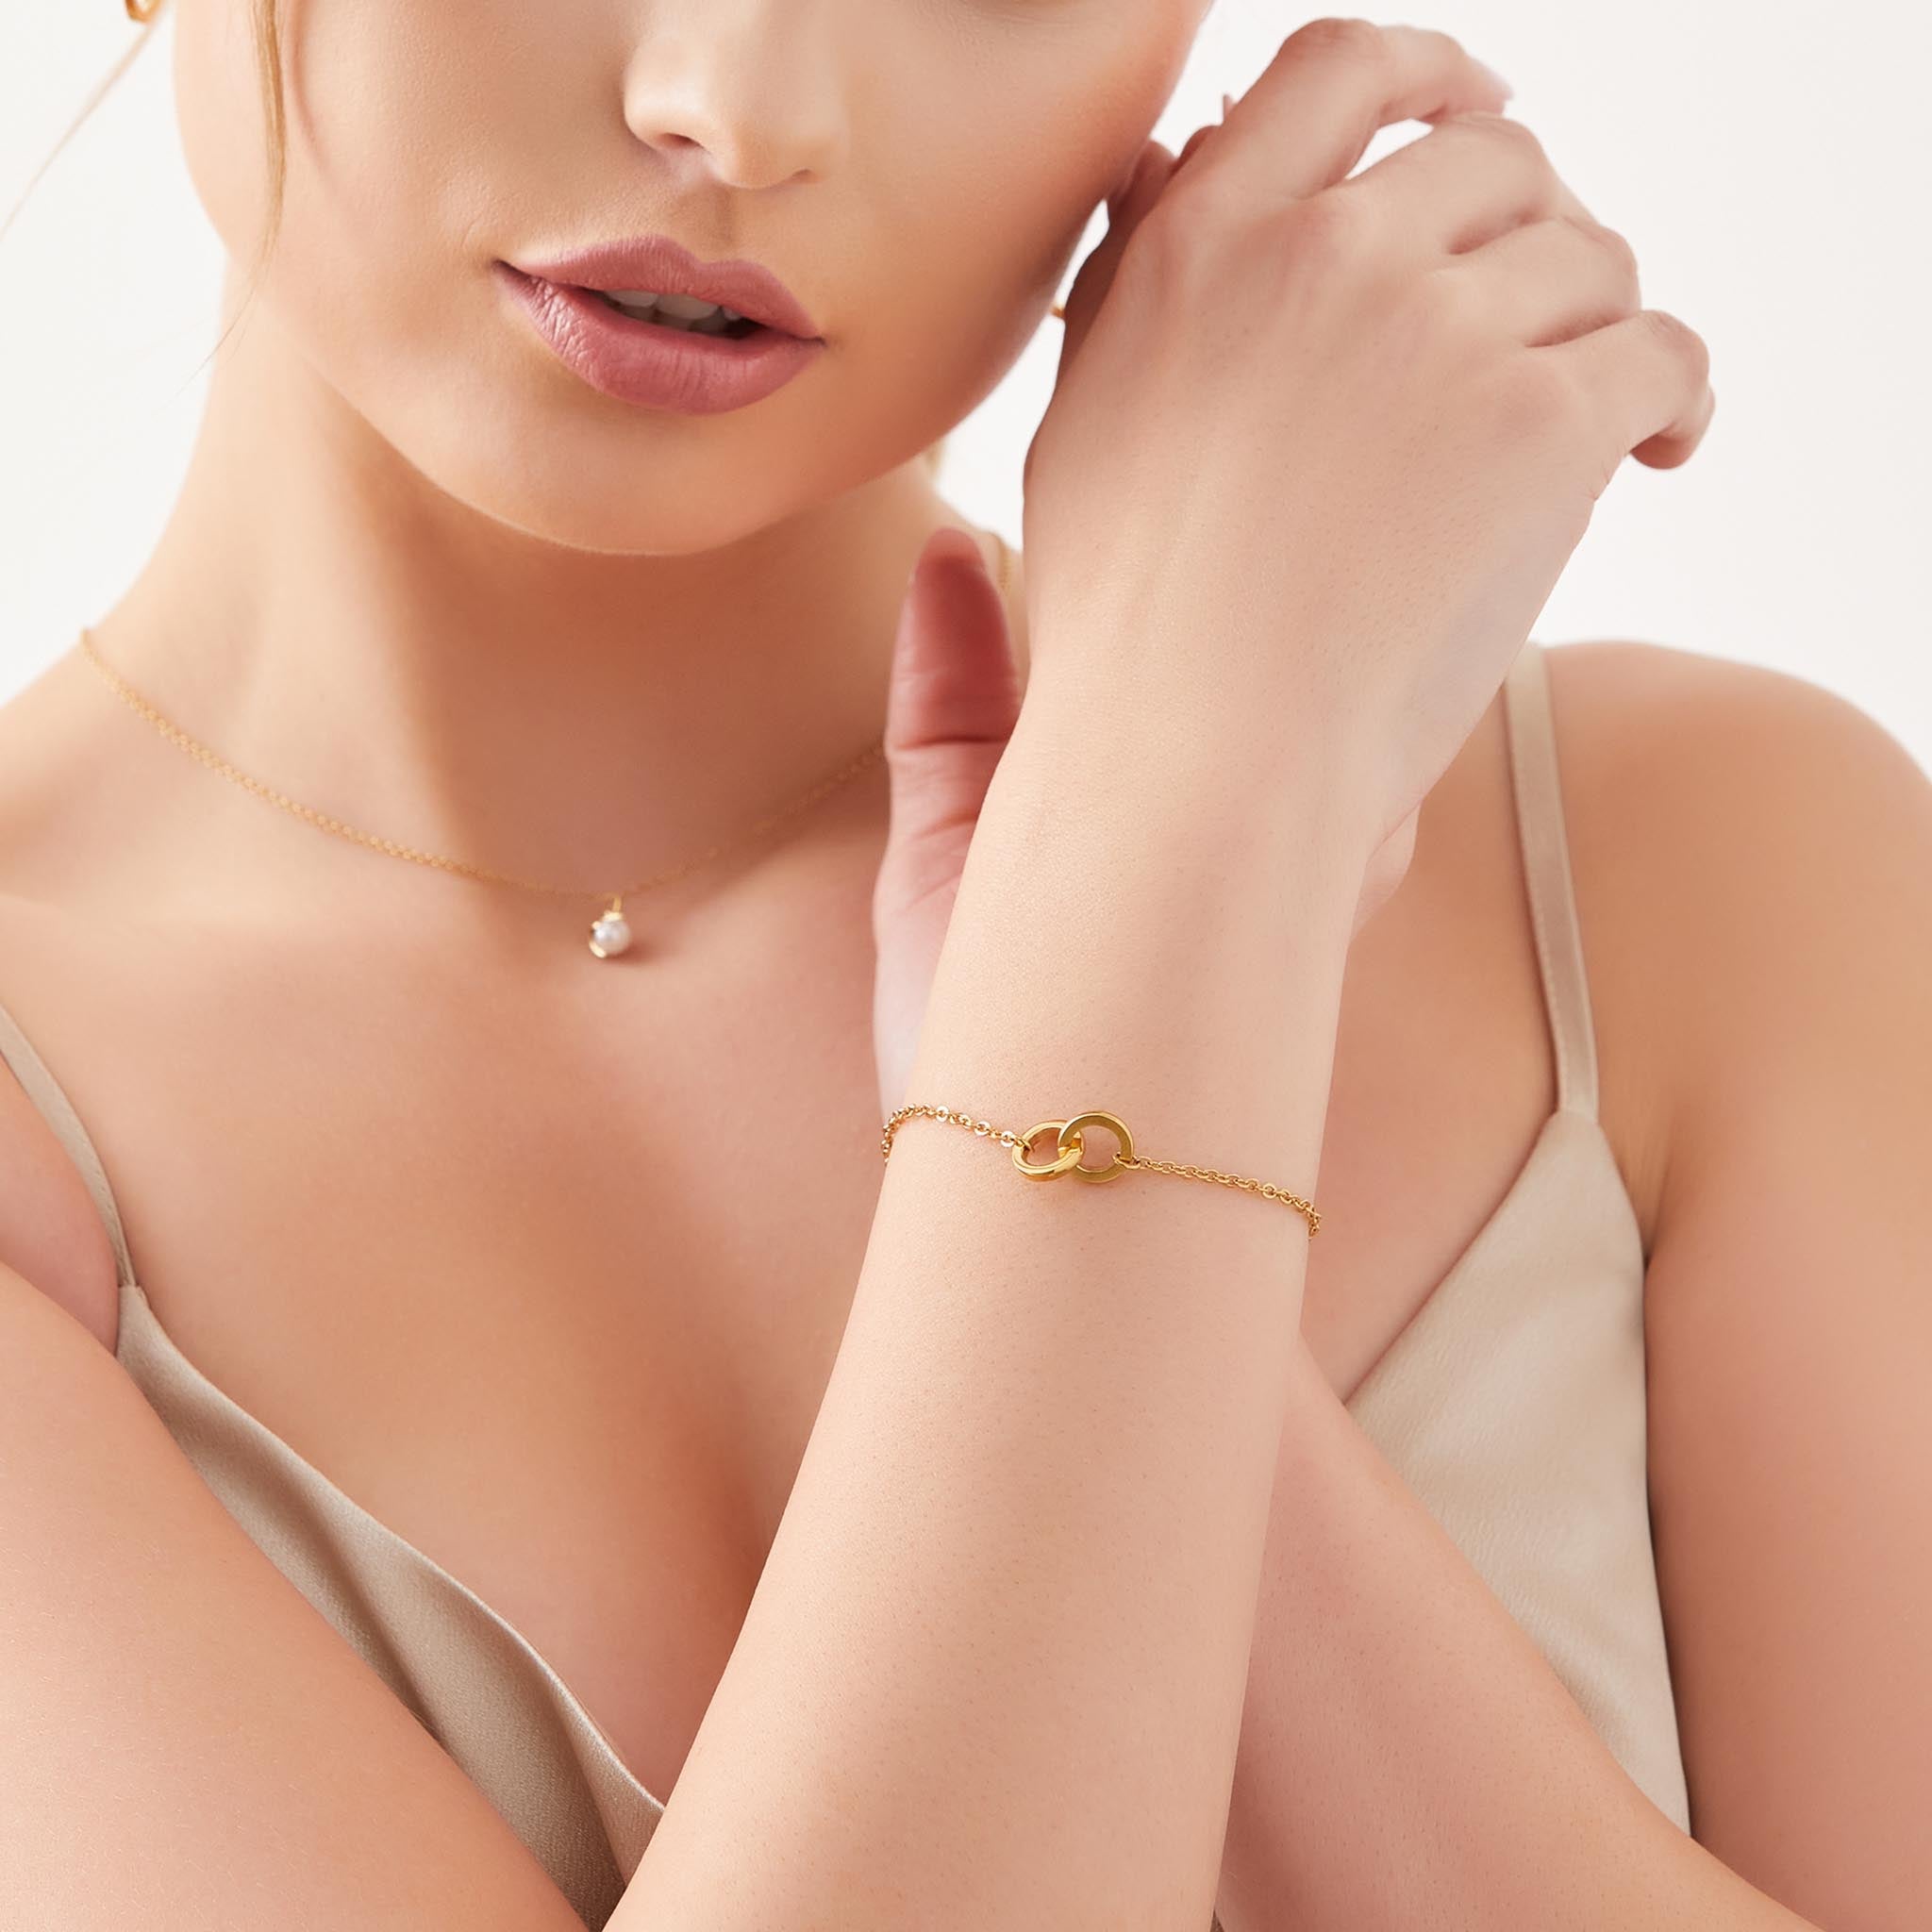 Gold soulmate bracelet, front view